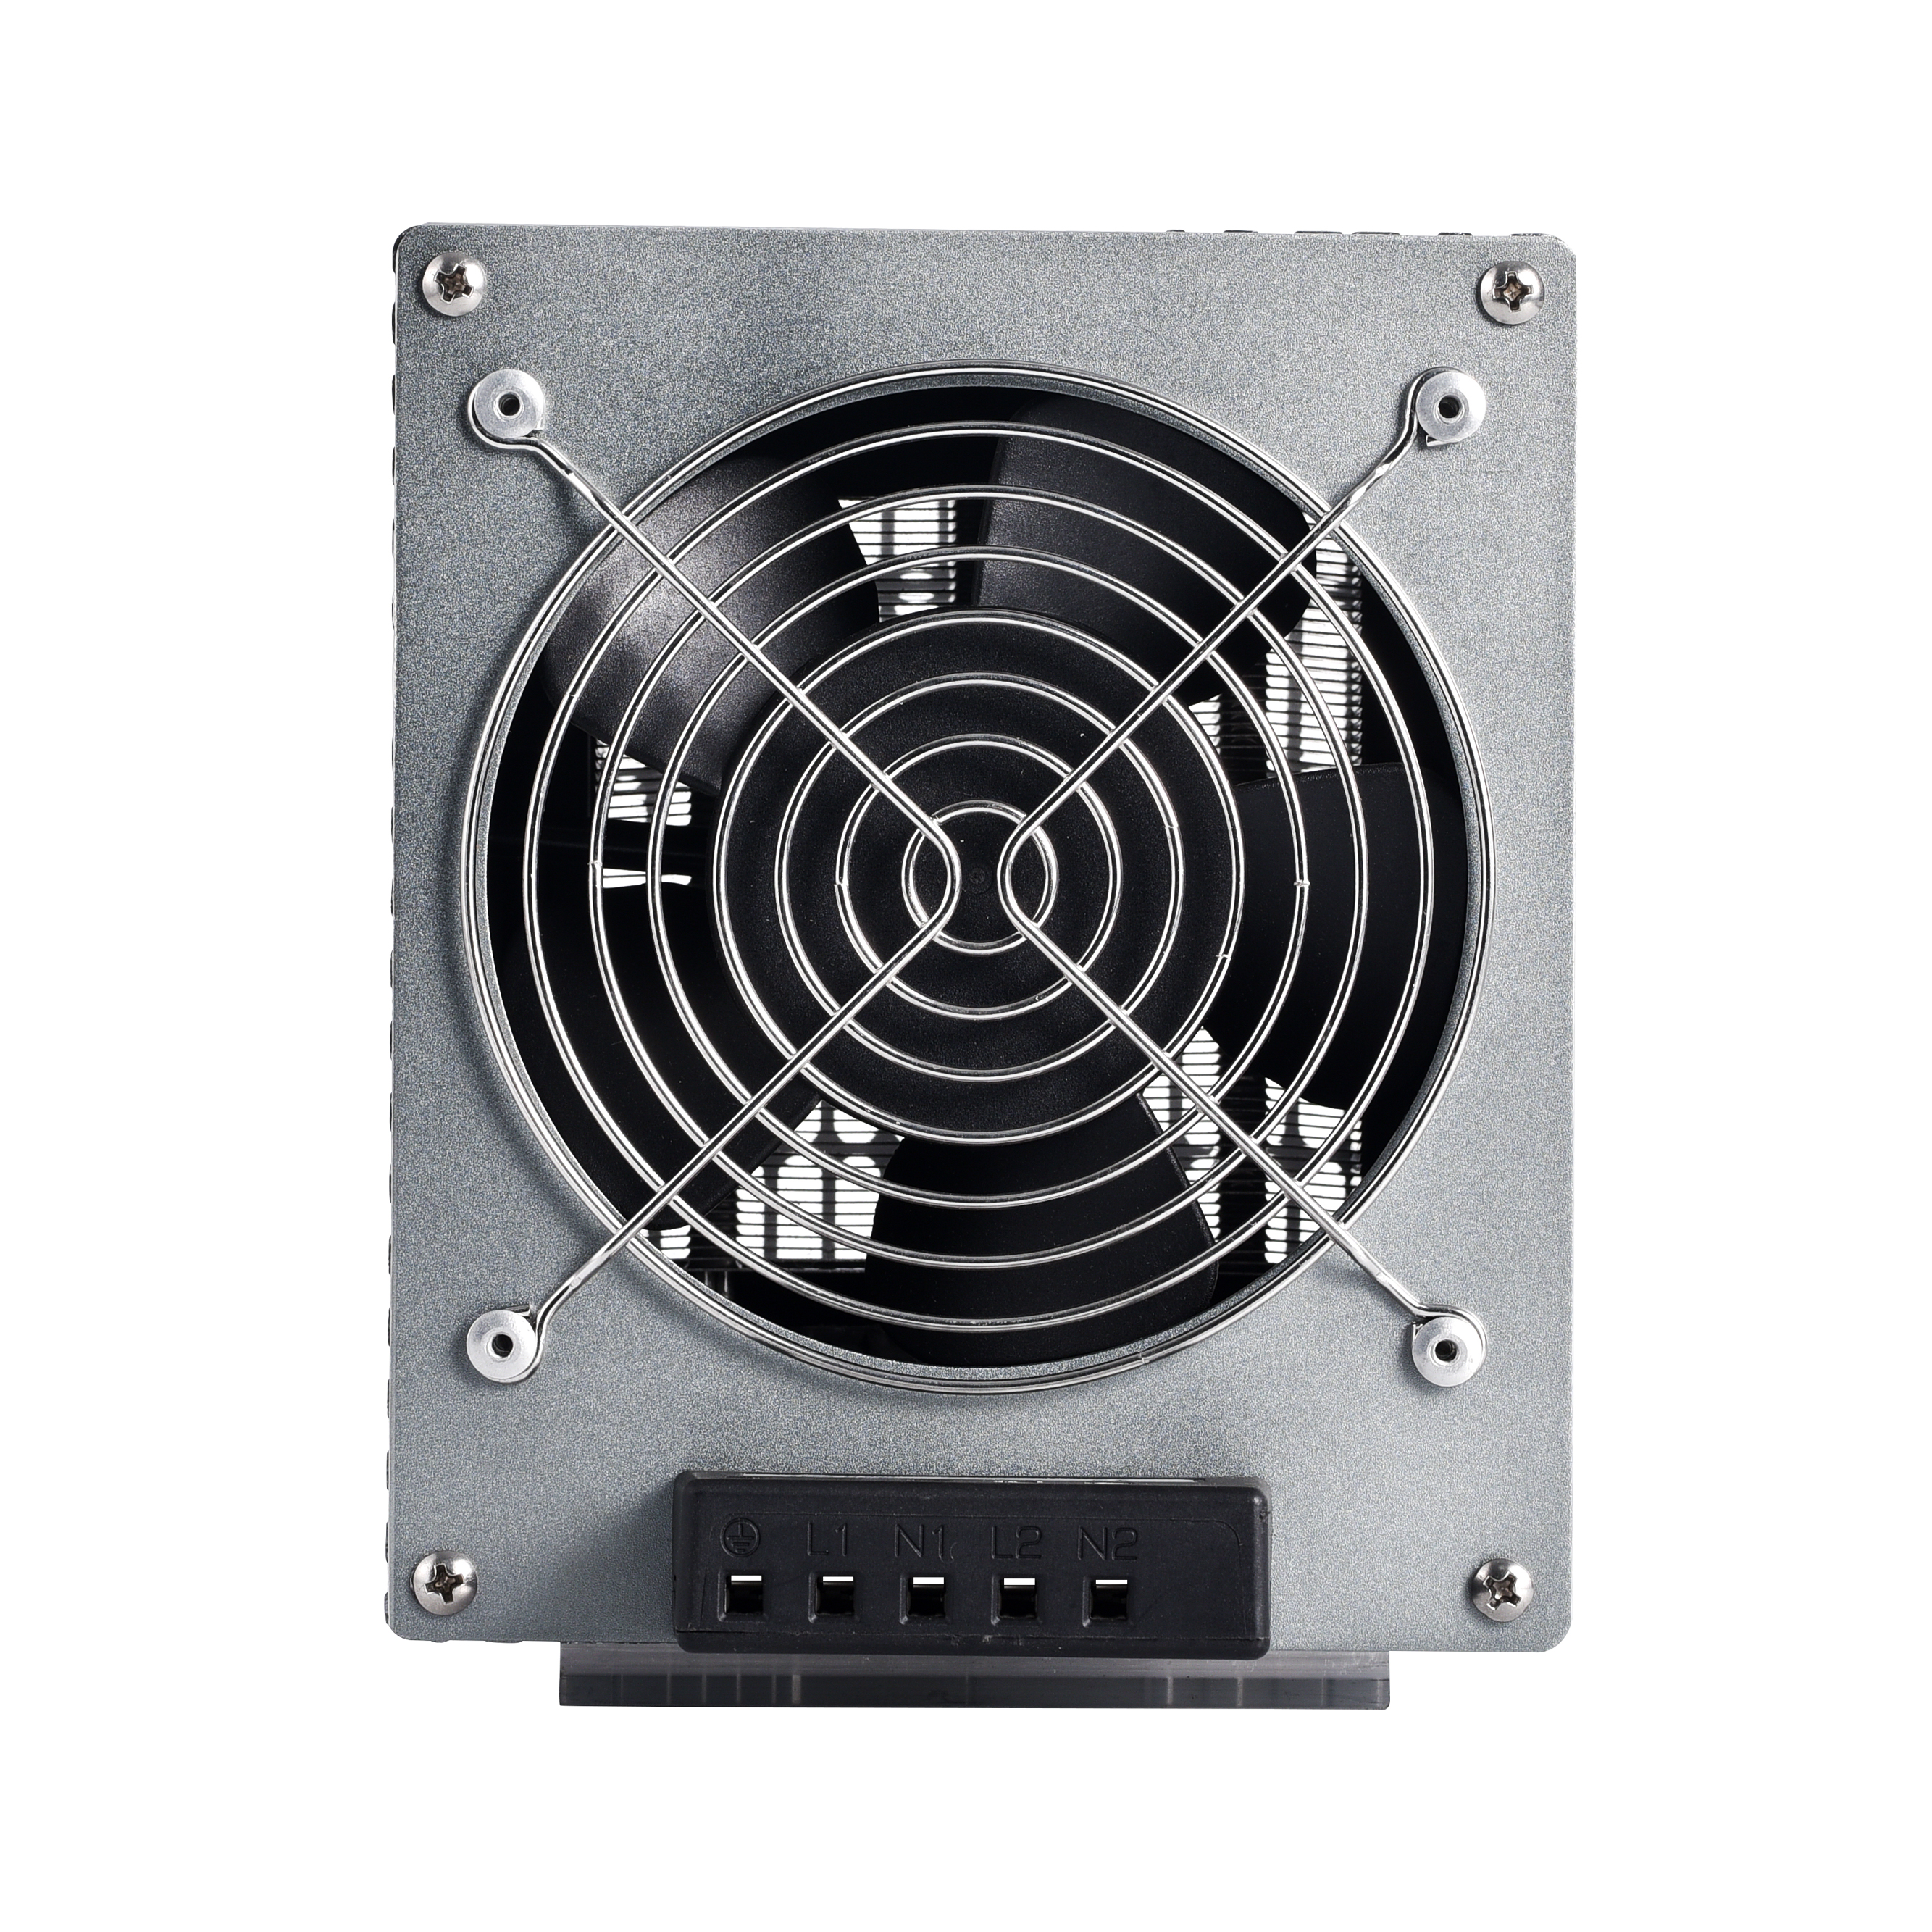 Cabinet fan heater KH150 moisture-proof dehumidification and anti-condensation PTC heater